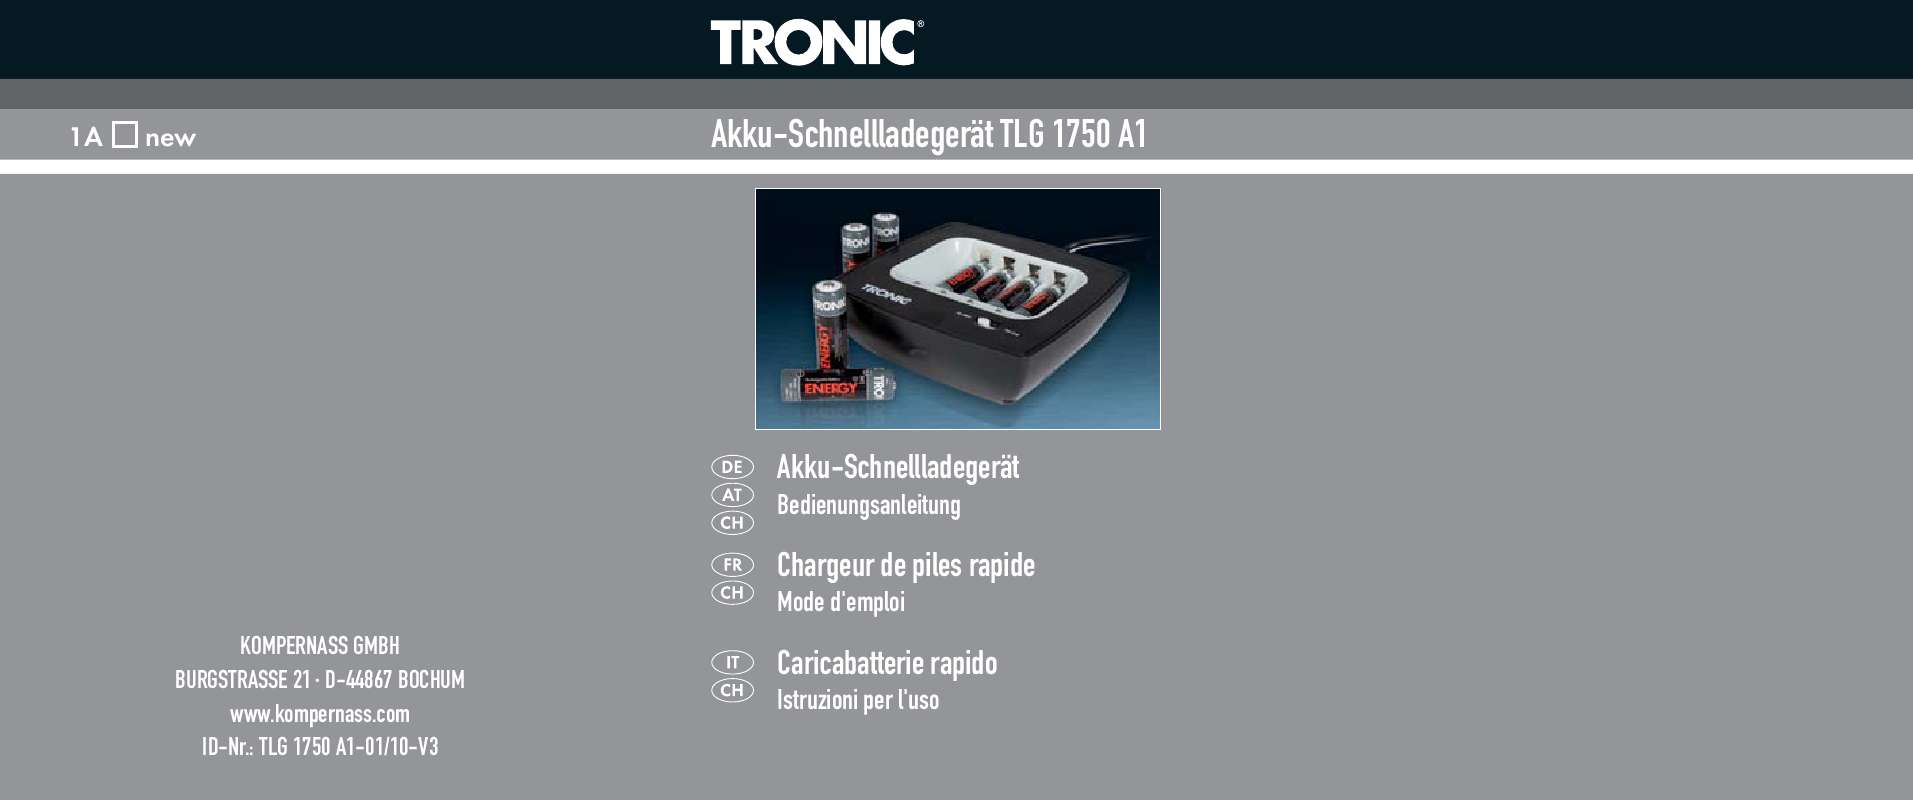 Guide utilisation  TRONIC TLG 1750 A1 QUICK-CHARGE RECHARGEABLE BATTERY CHARGER  de la marque TRONIC